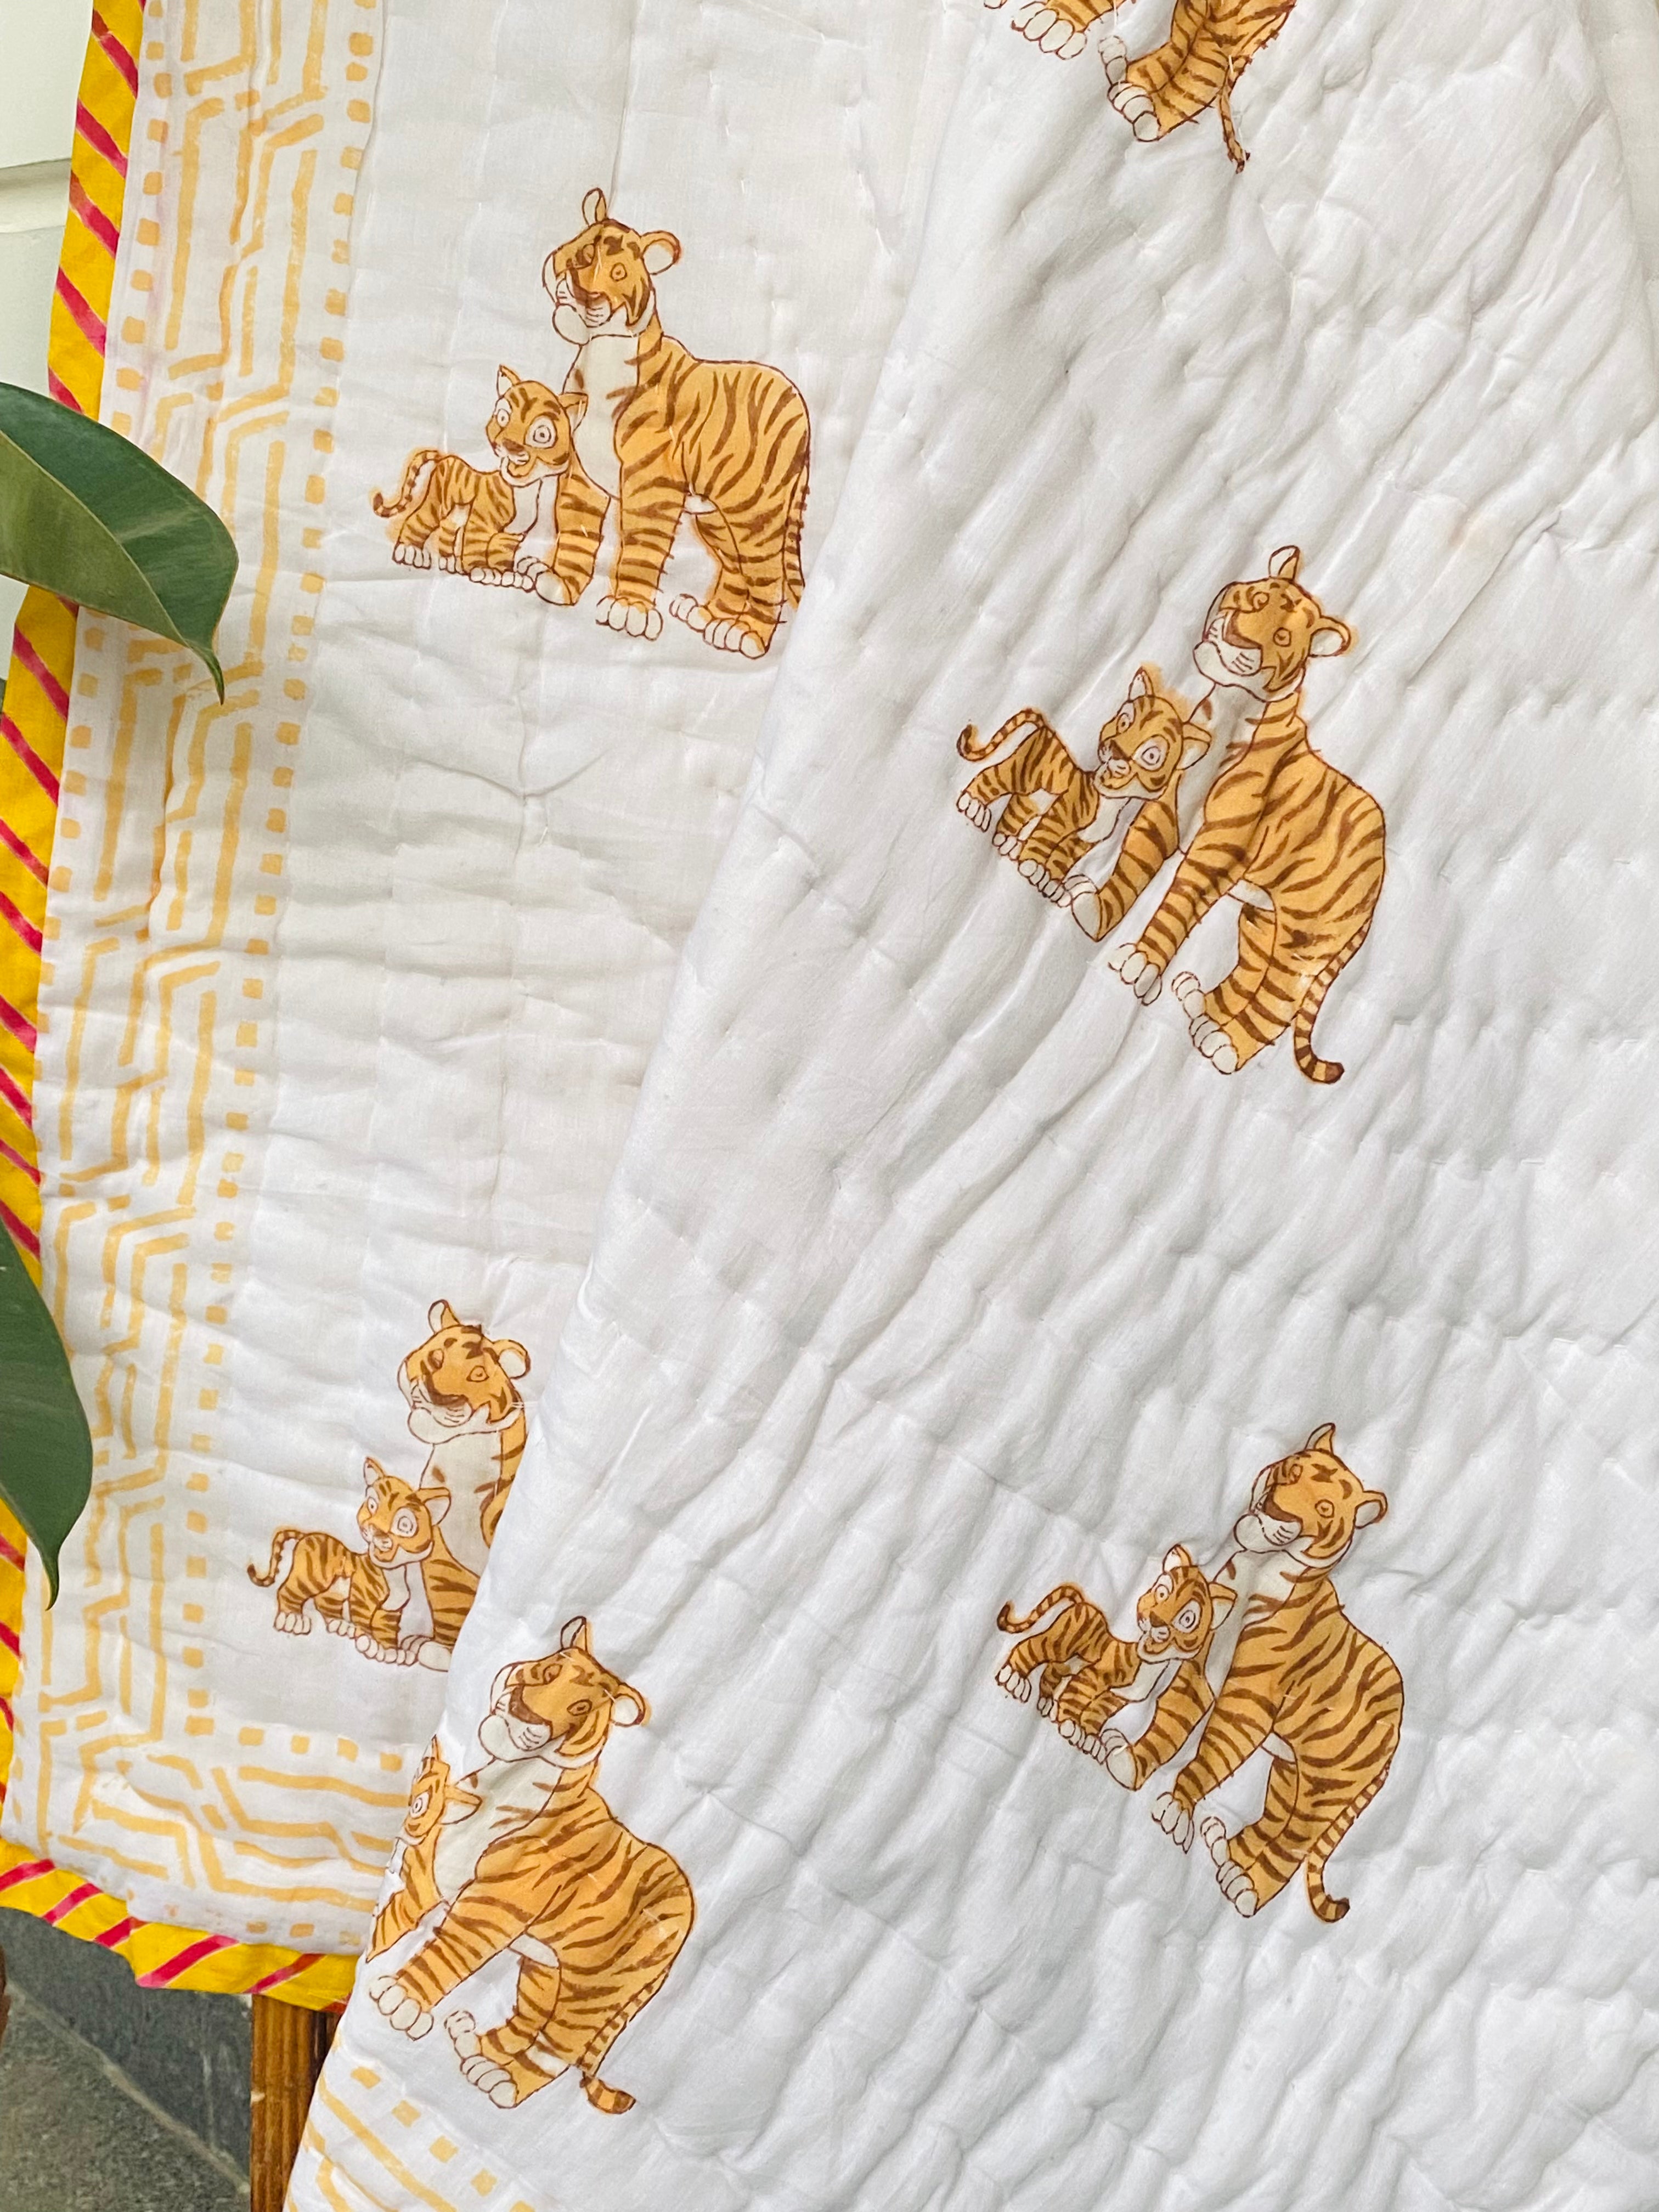 Tiger Kids Quilt Handblock Printed- 60*40 inches